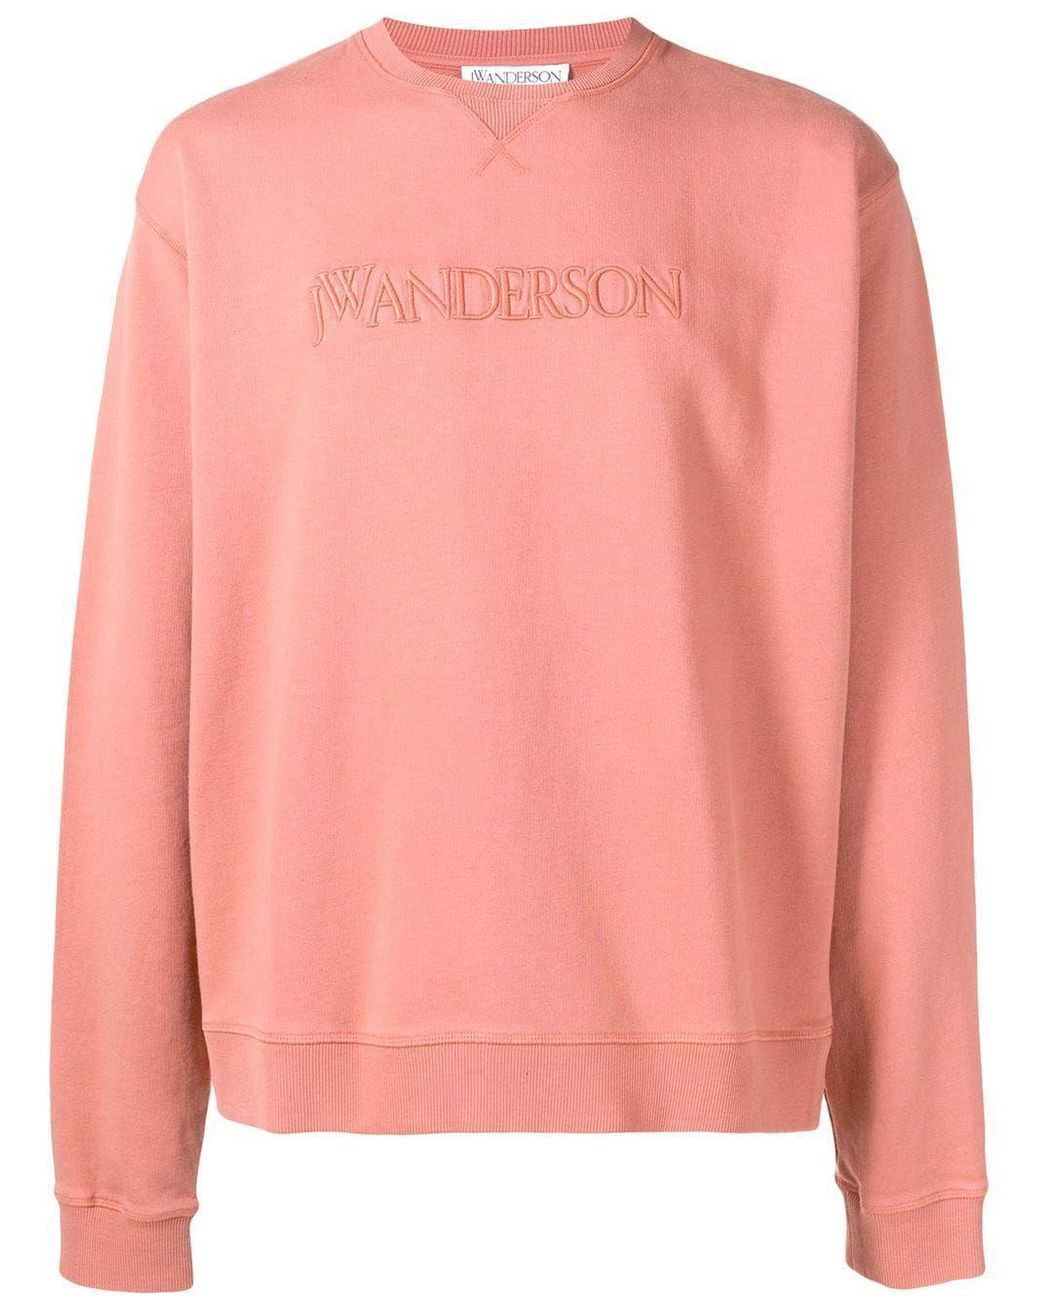 JW Anderson Cotton Sweatshirt in Pink for Men - Lyst